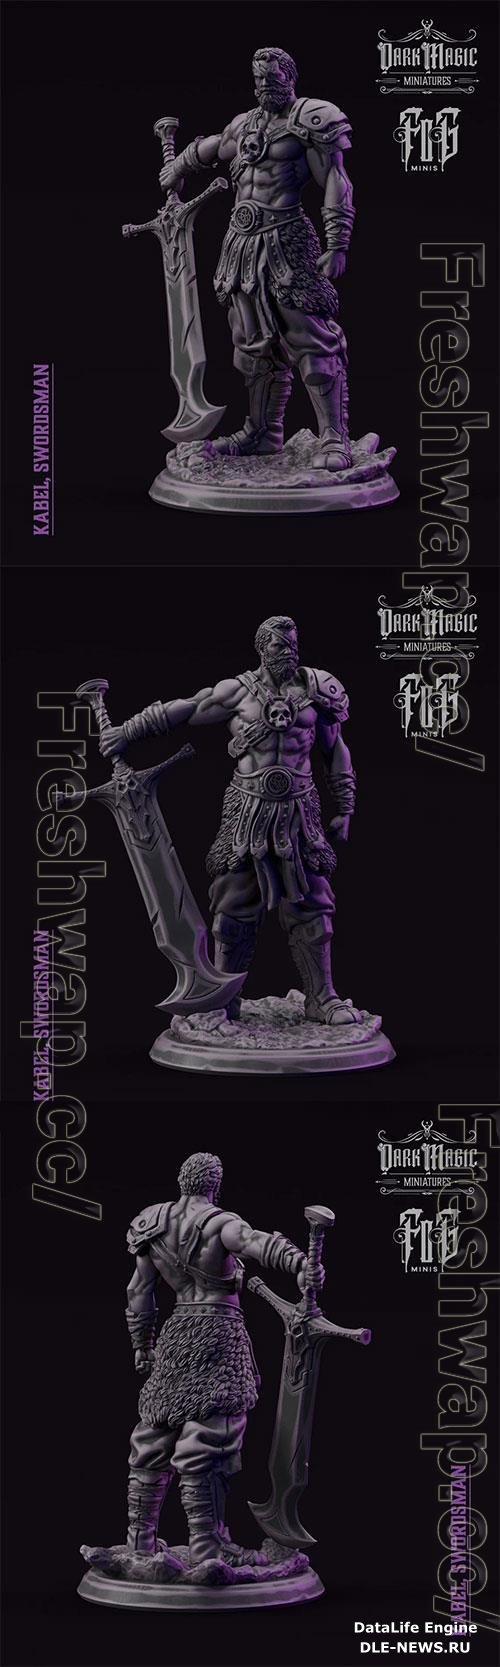 Kabel The Swordsman 3D Print